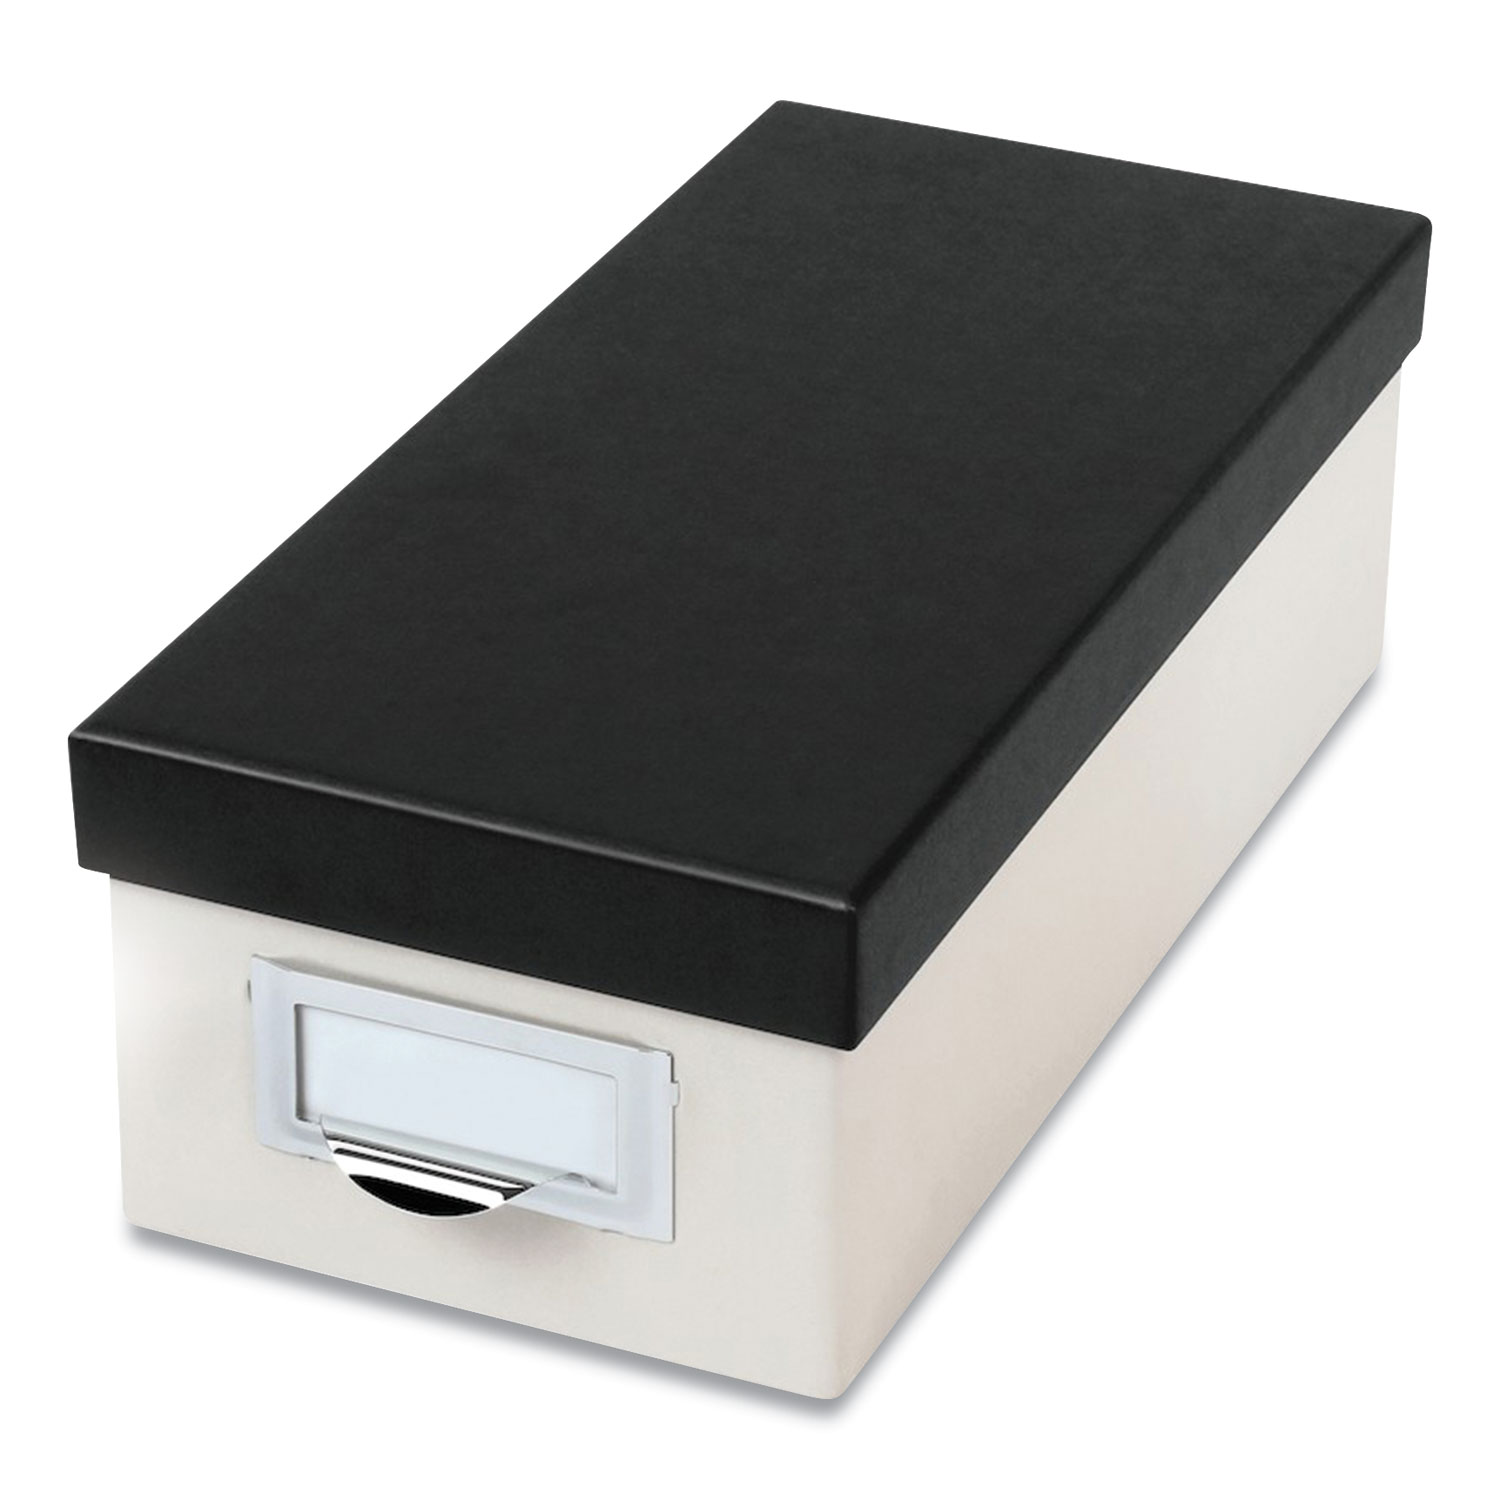 Oxford™ Index Card Storage Box, Holds 1,000 3 x 5 Cards, Pressboard, Marble White/Black, 5.5 x 11.5 x 3.88